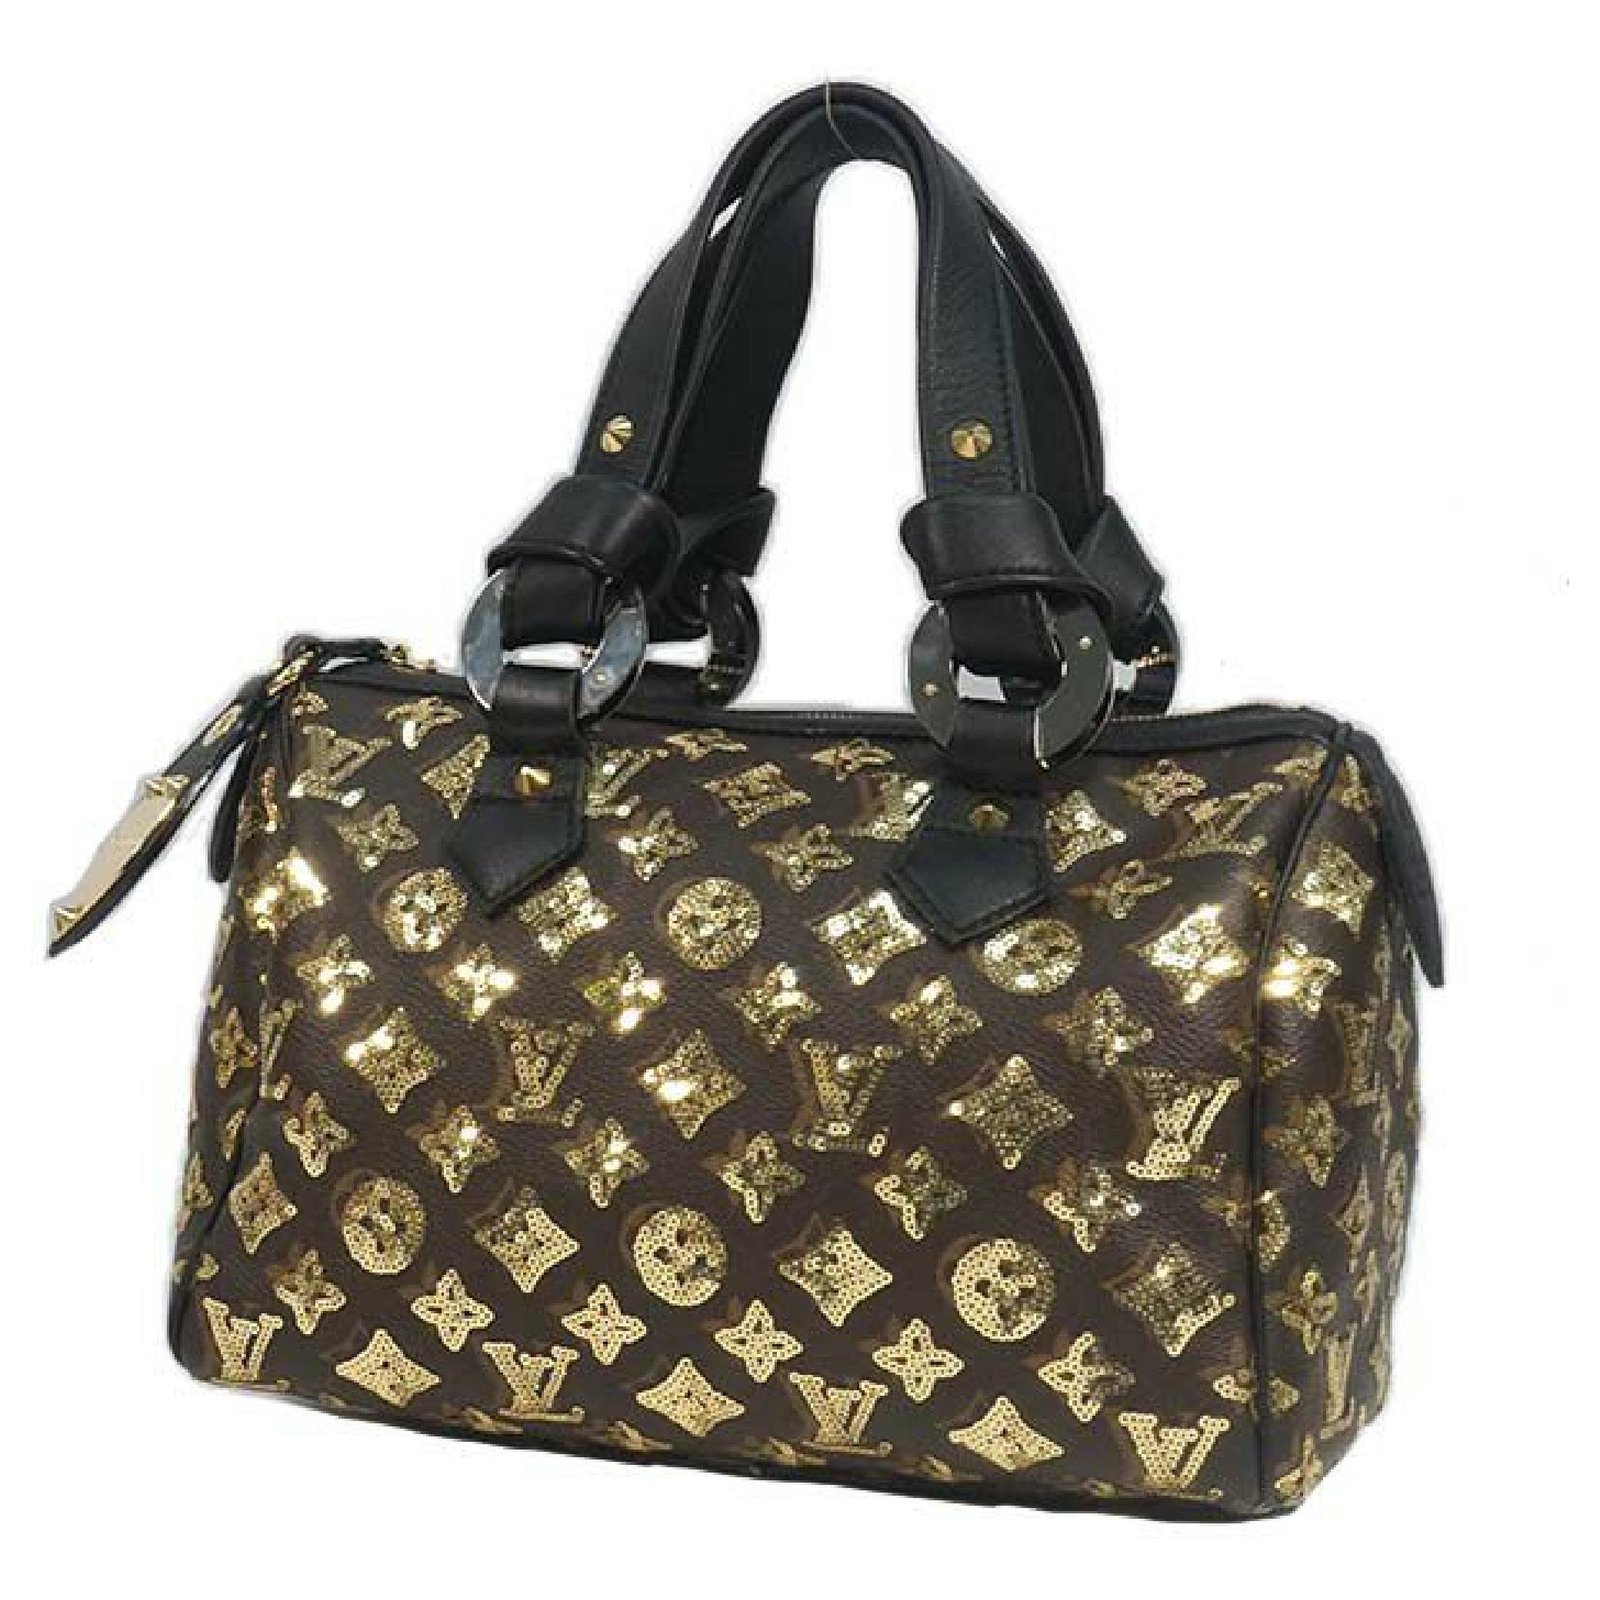 LOUIS VUITTON spangle Speedy 30 Womens handbag M40244 black x gold